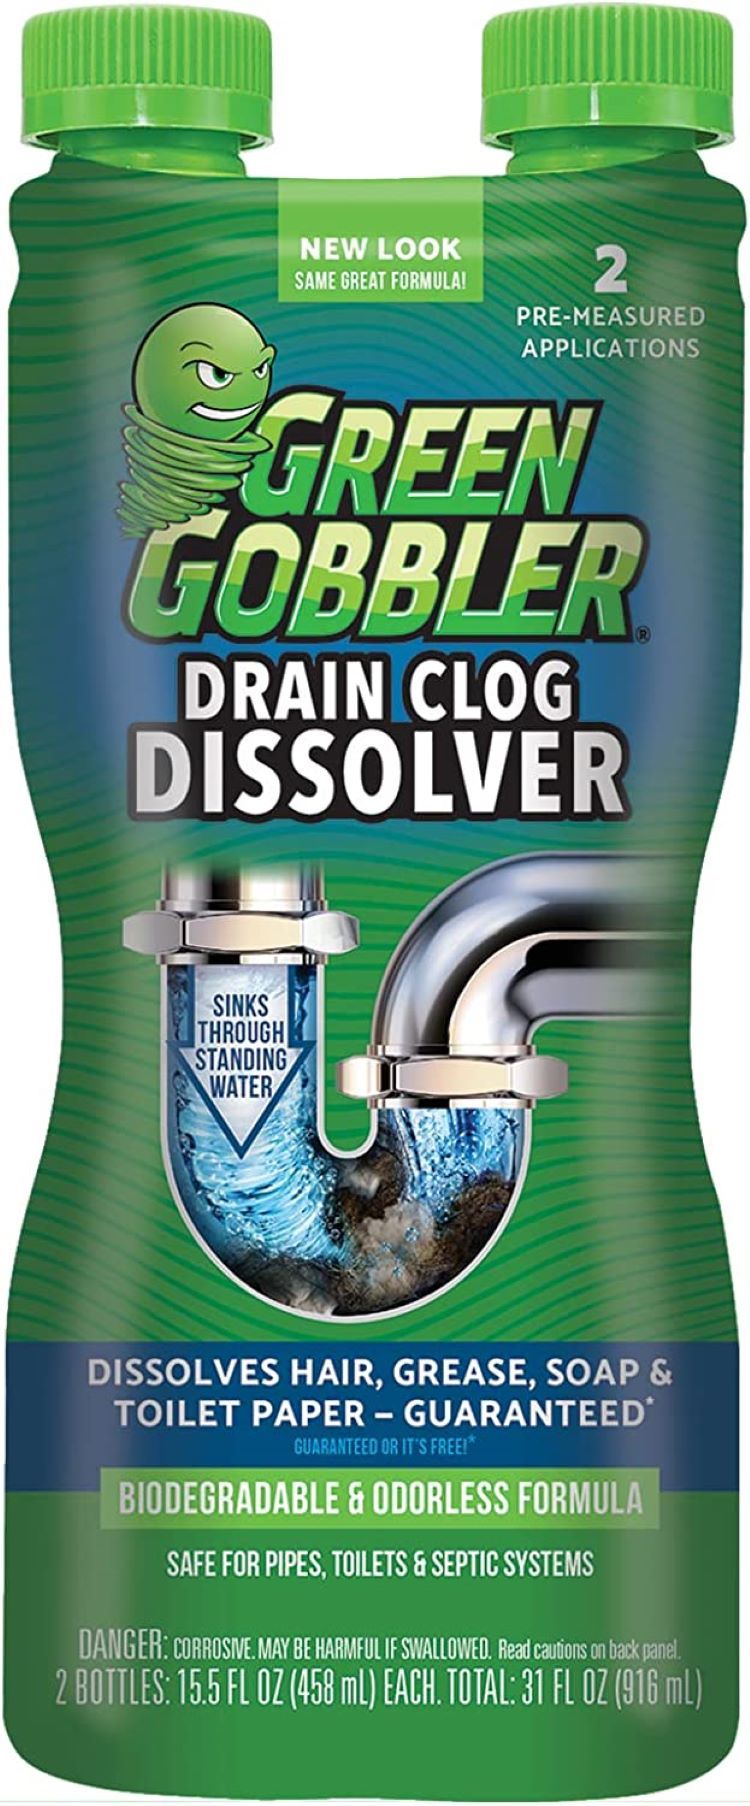 https://cdn.bestreviews.com/images/v4desktop/product-matrix/best-drain-cleaners-green-gobbler-clog-dissolver-opener-31-oz.jpg